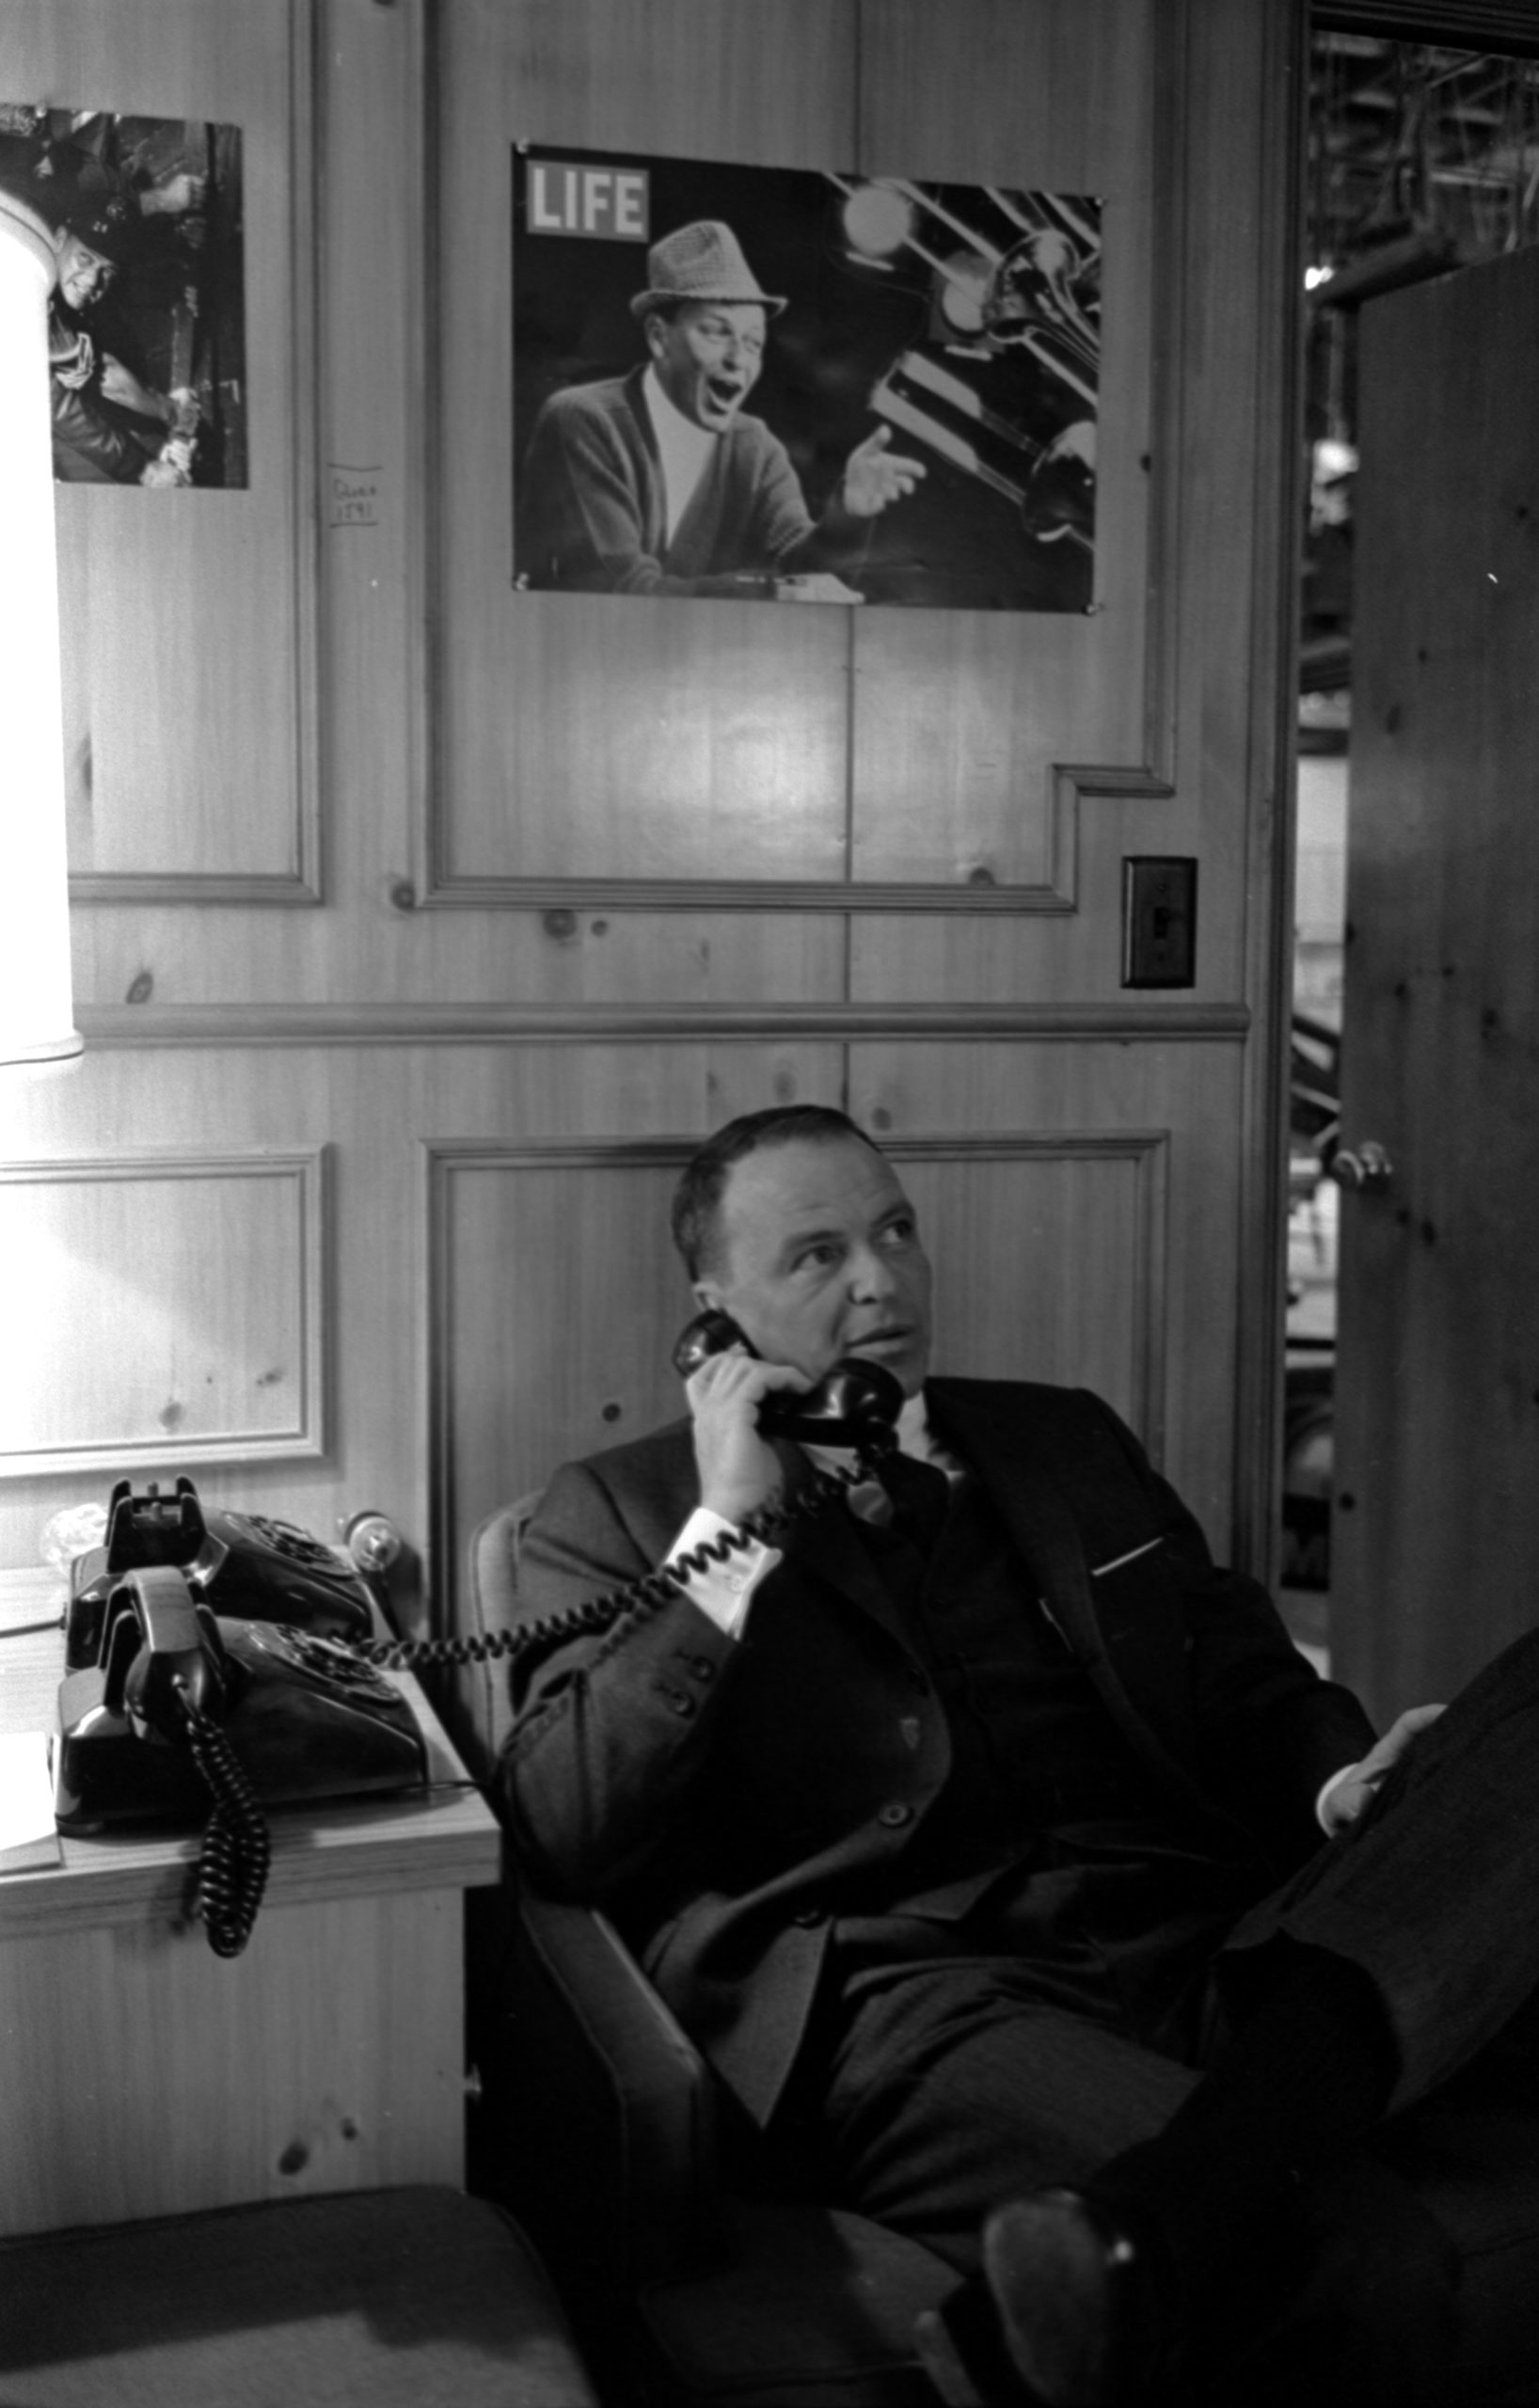 Frank Sinatra on the phone, 1965.